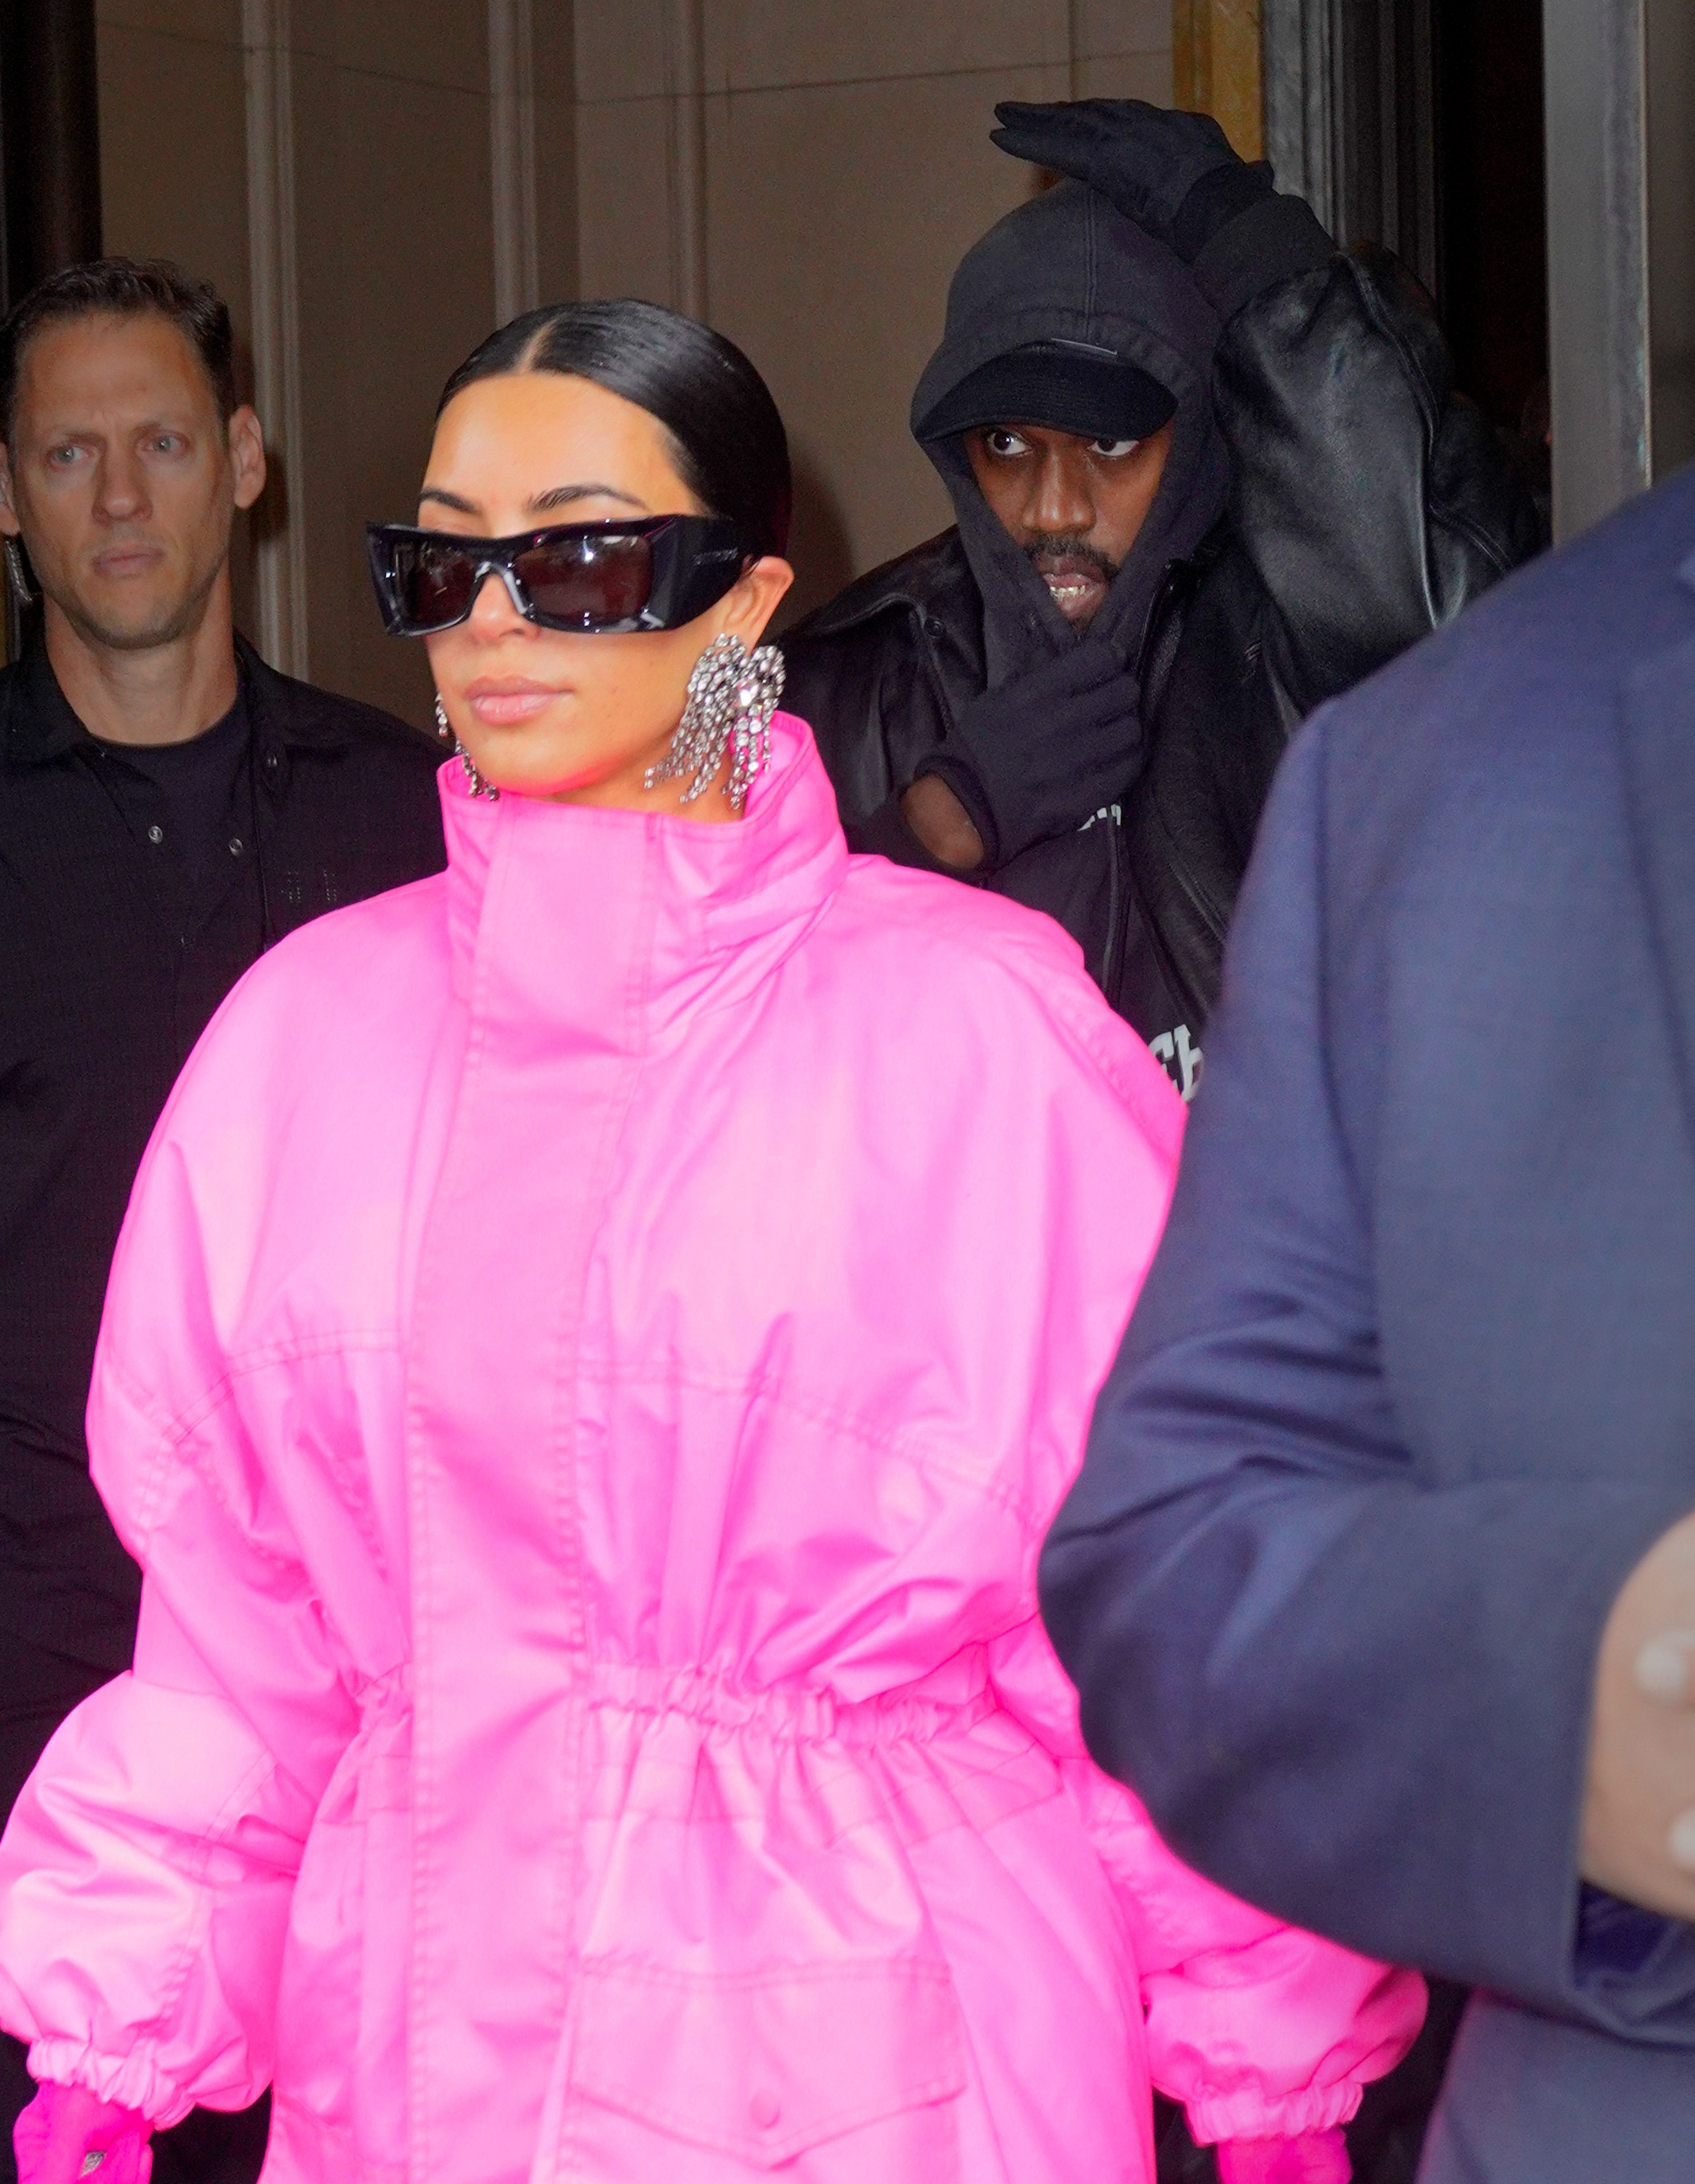 How Kanye West Feels About the Kim Kardashian and Tom Brady Romance Rumors